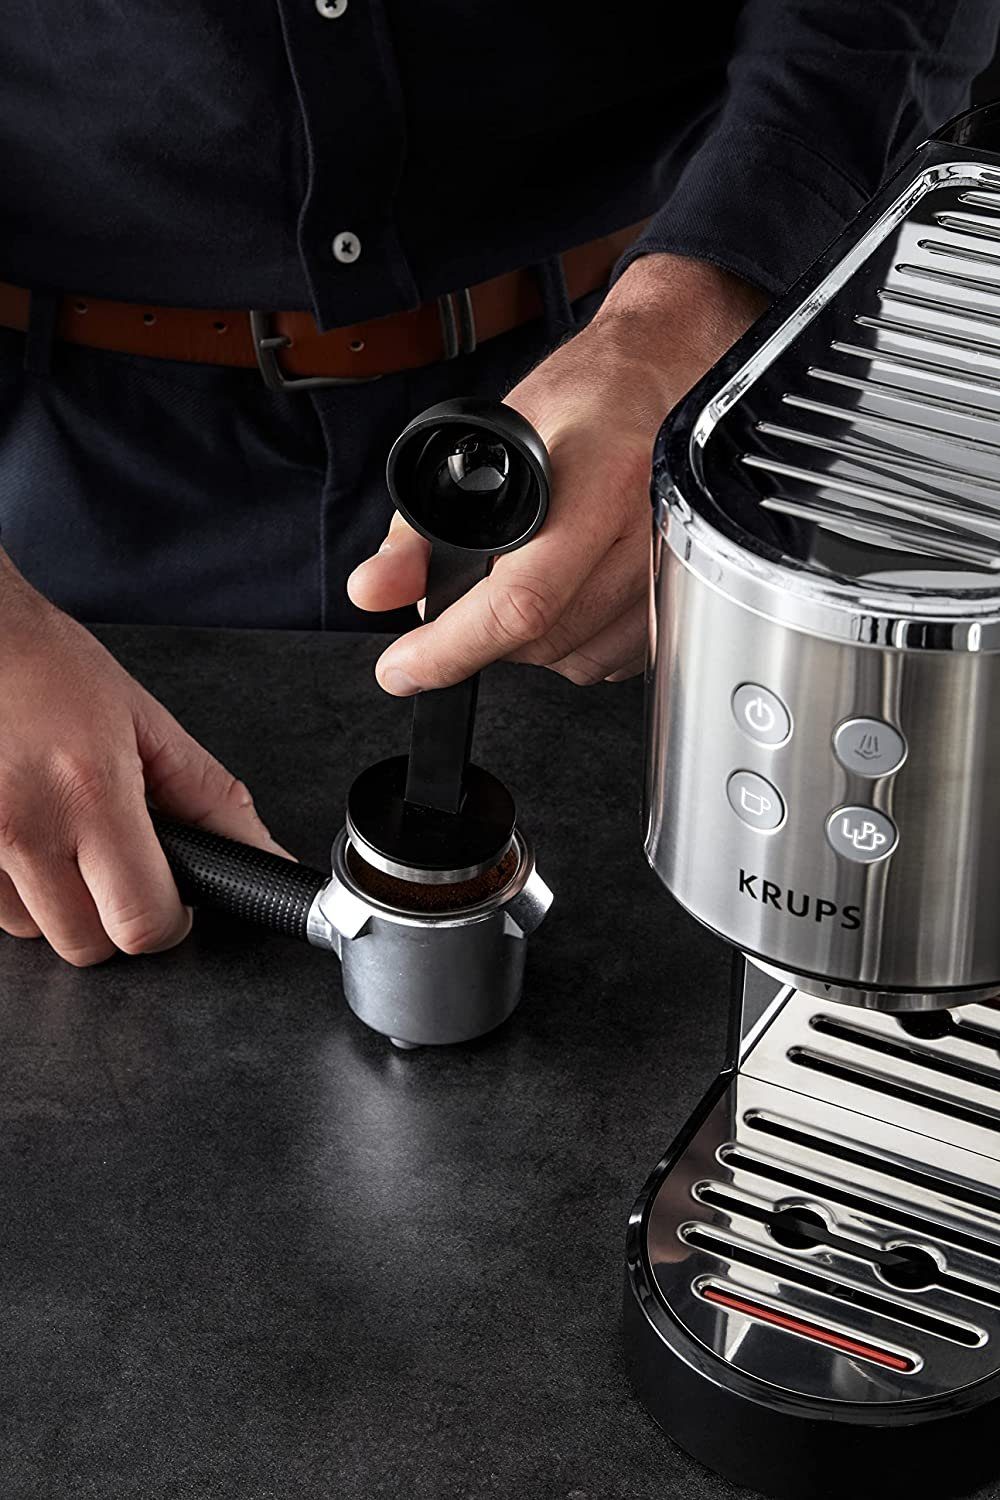 Krups Espressomaschine XP442C, 1l Kaffeekanne, Abschaltung, 15 automatischer + Kaffeepads Filtereinsatz Edelstahl, Bar Tamper, Milchschaumdüse ESE geeignet